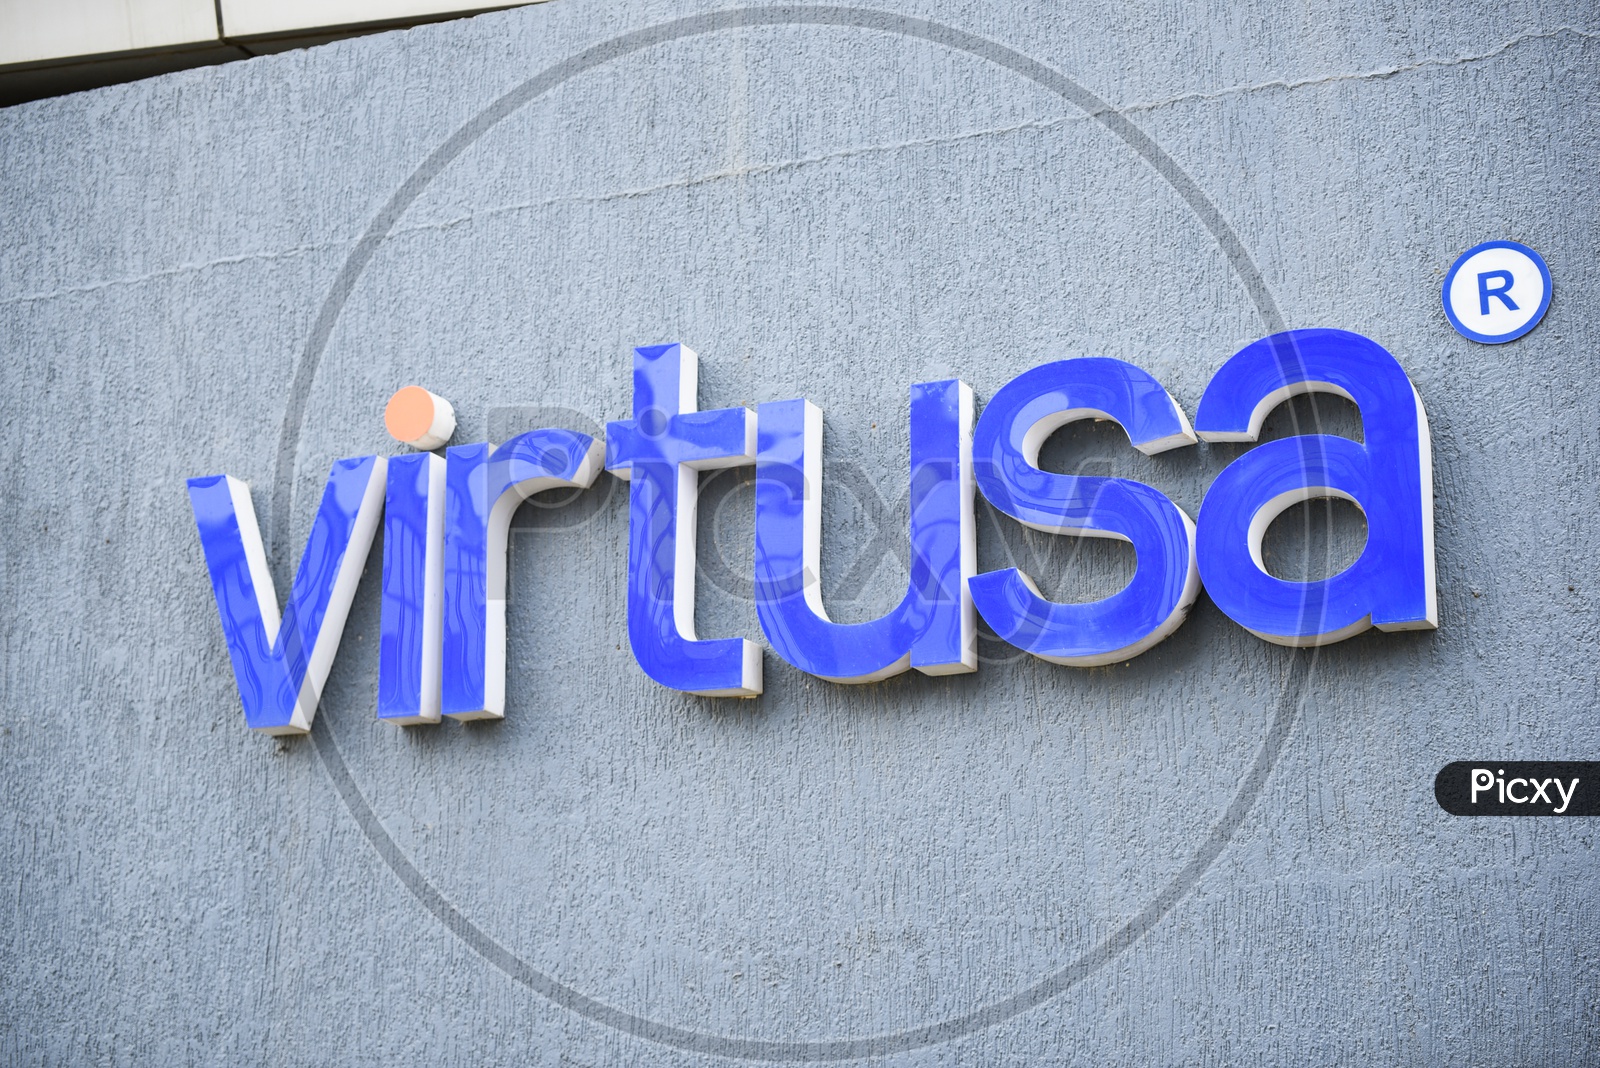 Virtusa  Company Name Board